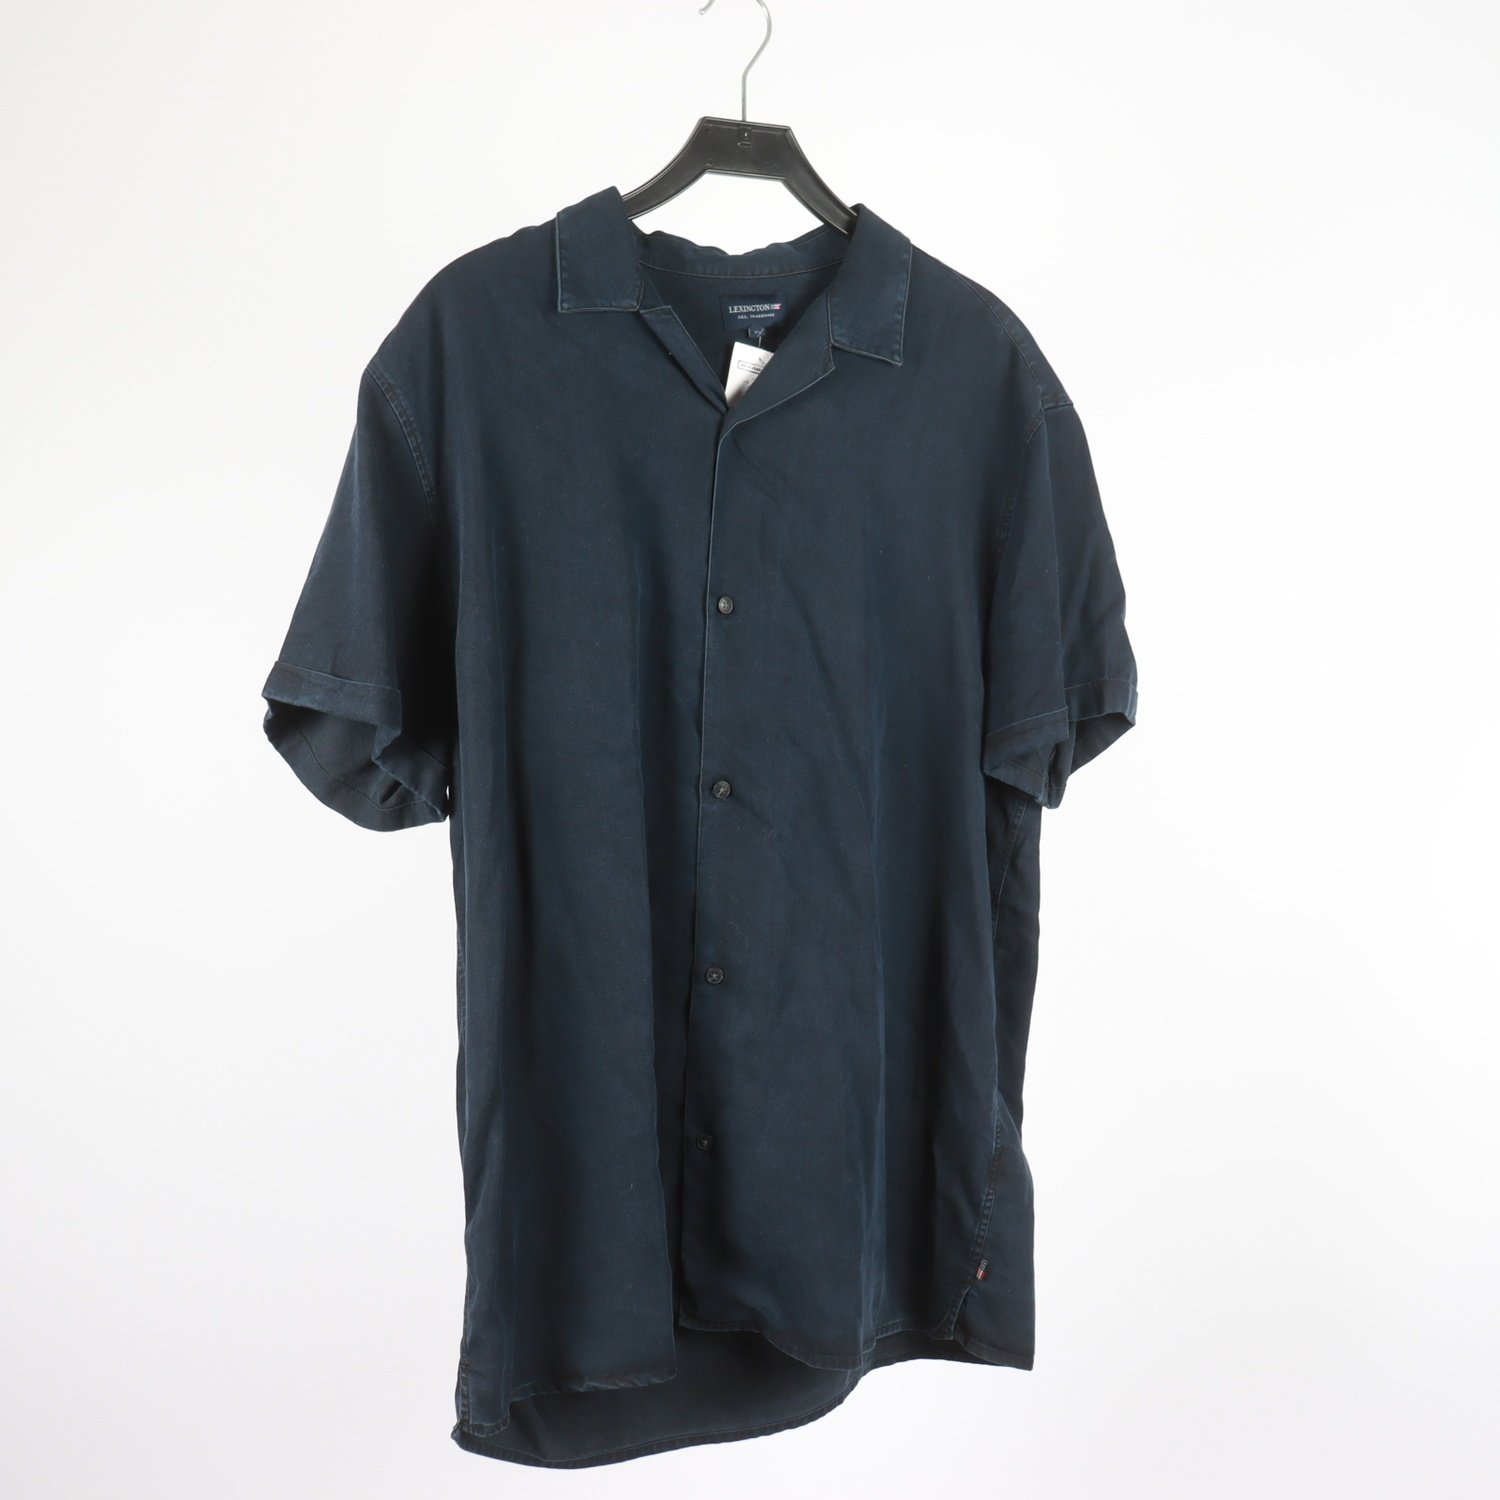 Skjorta, Lexington, 100% lycocell, mörkblå, stl. XL